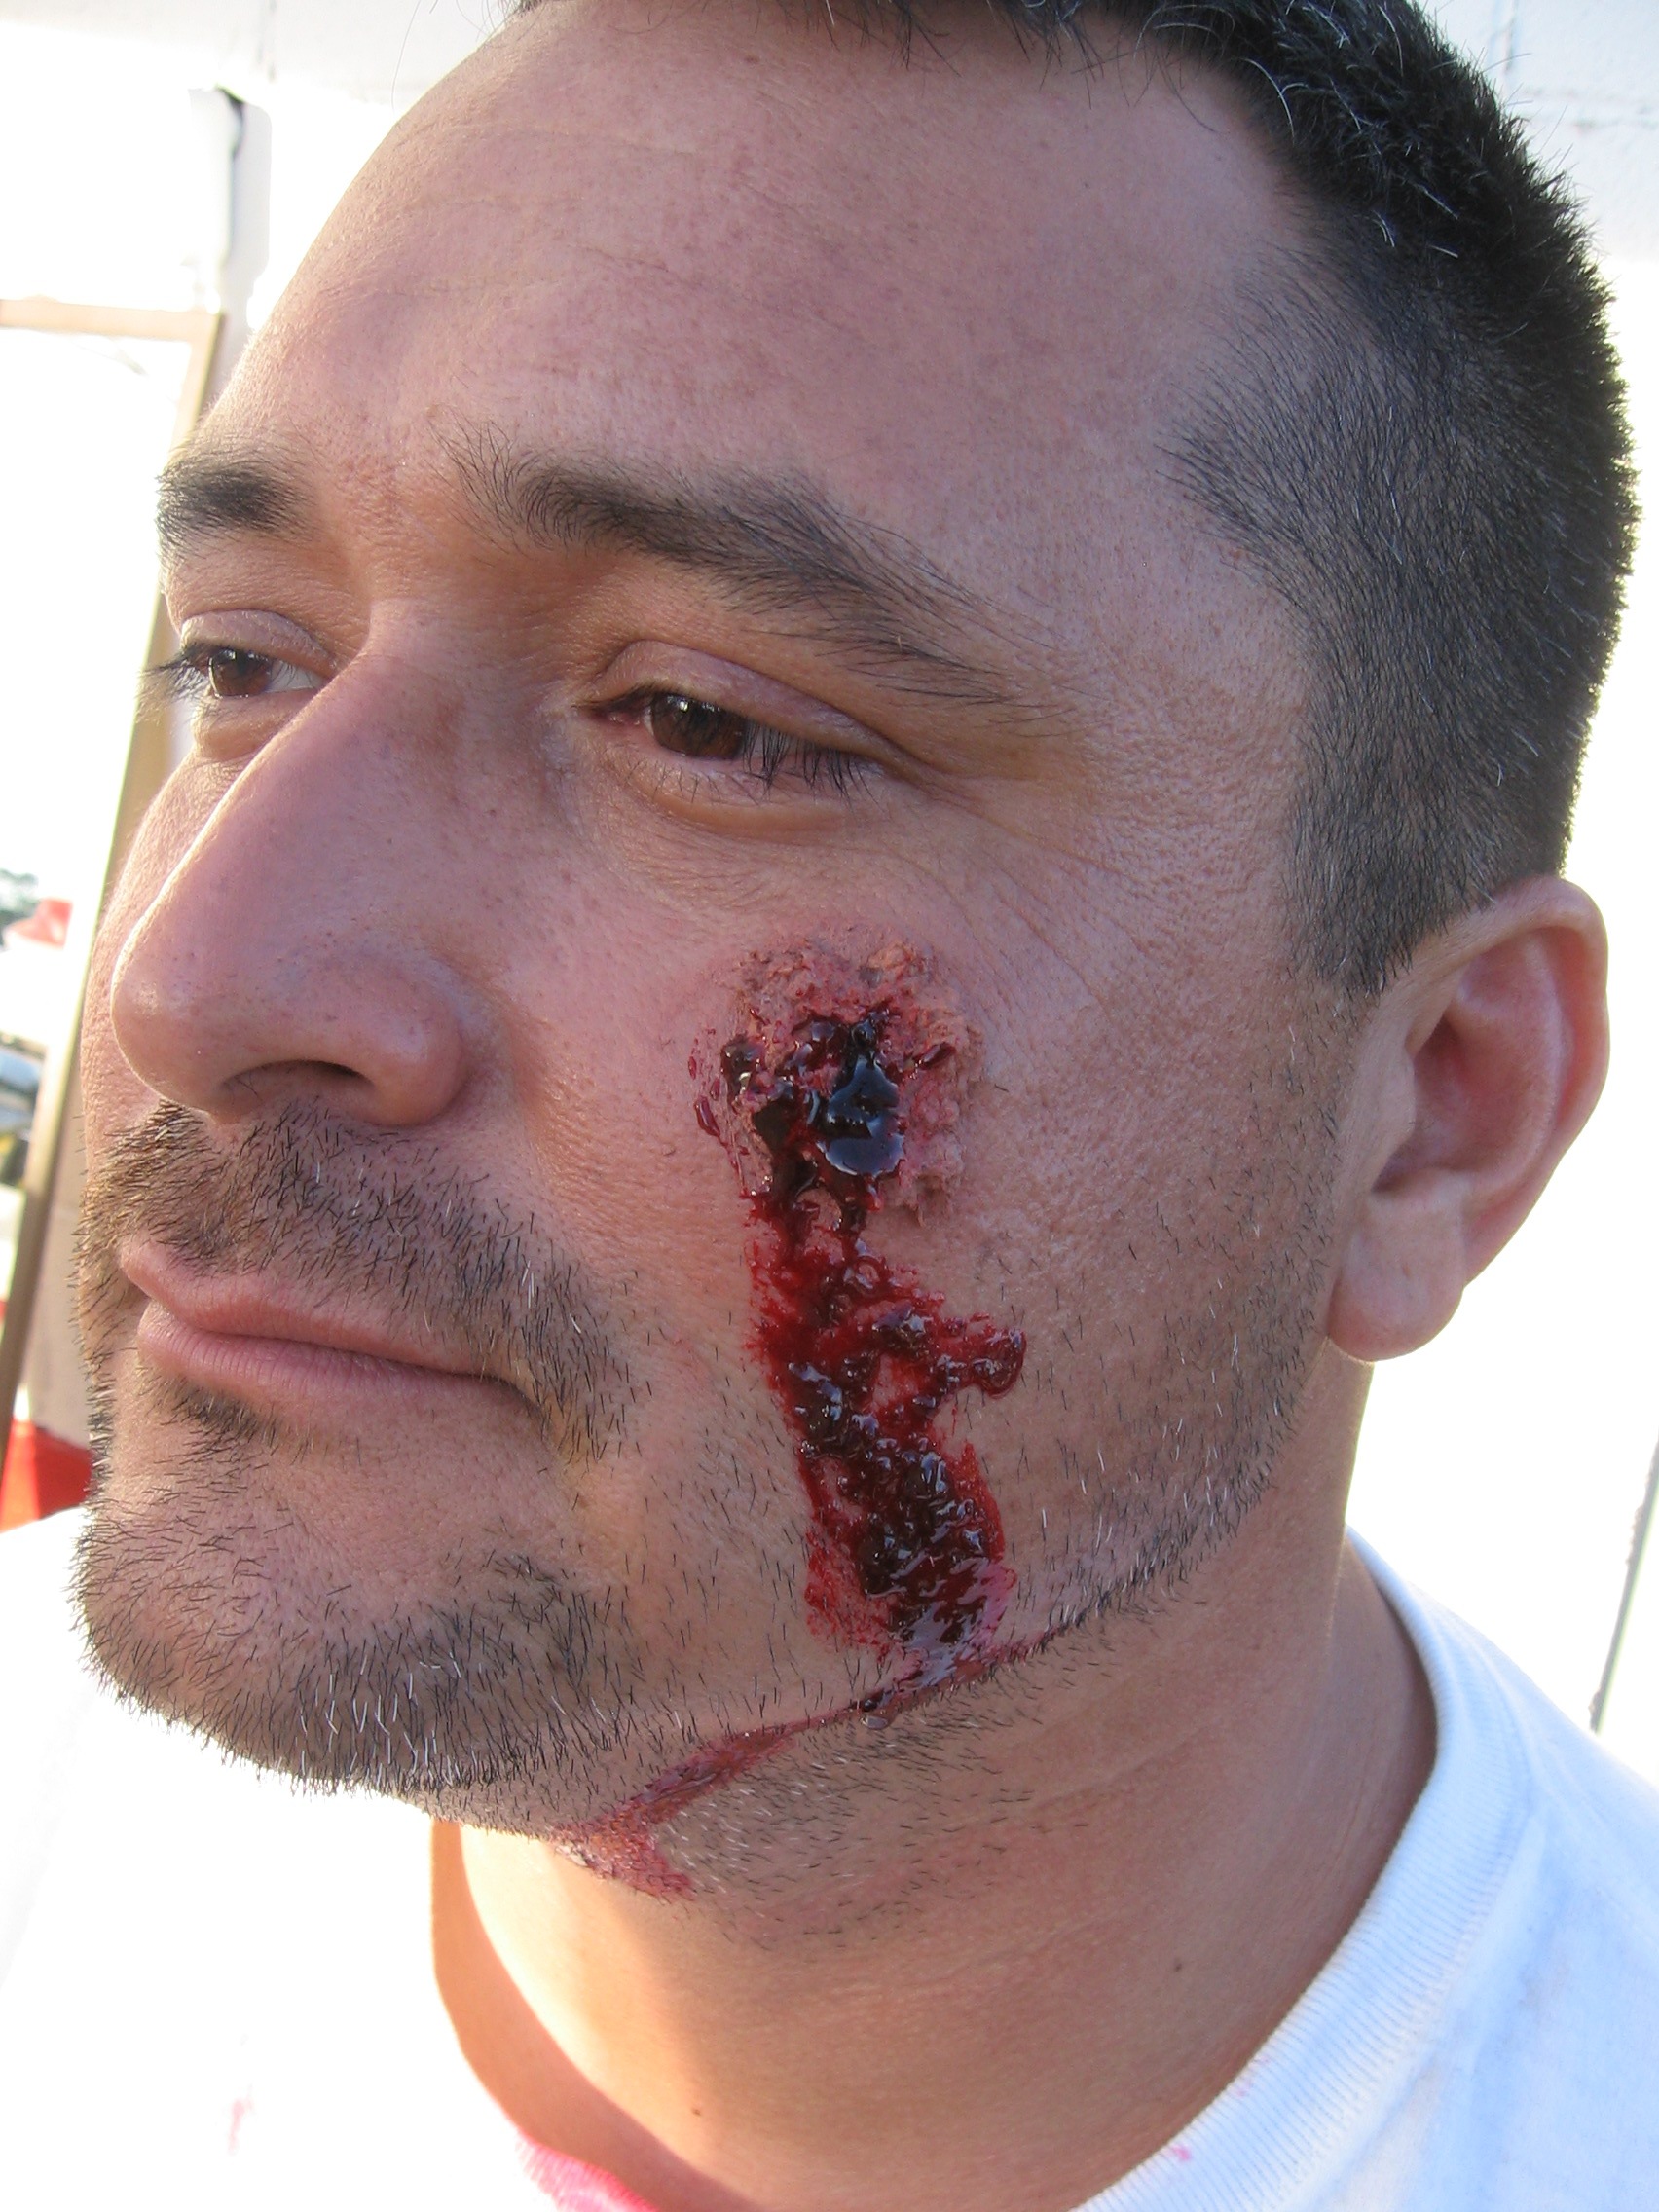 SFX: Bullet wound & blood